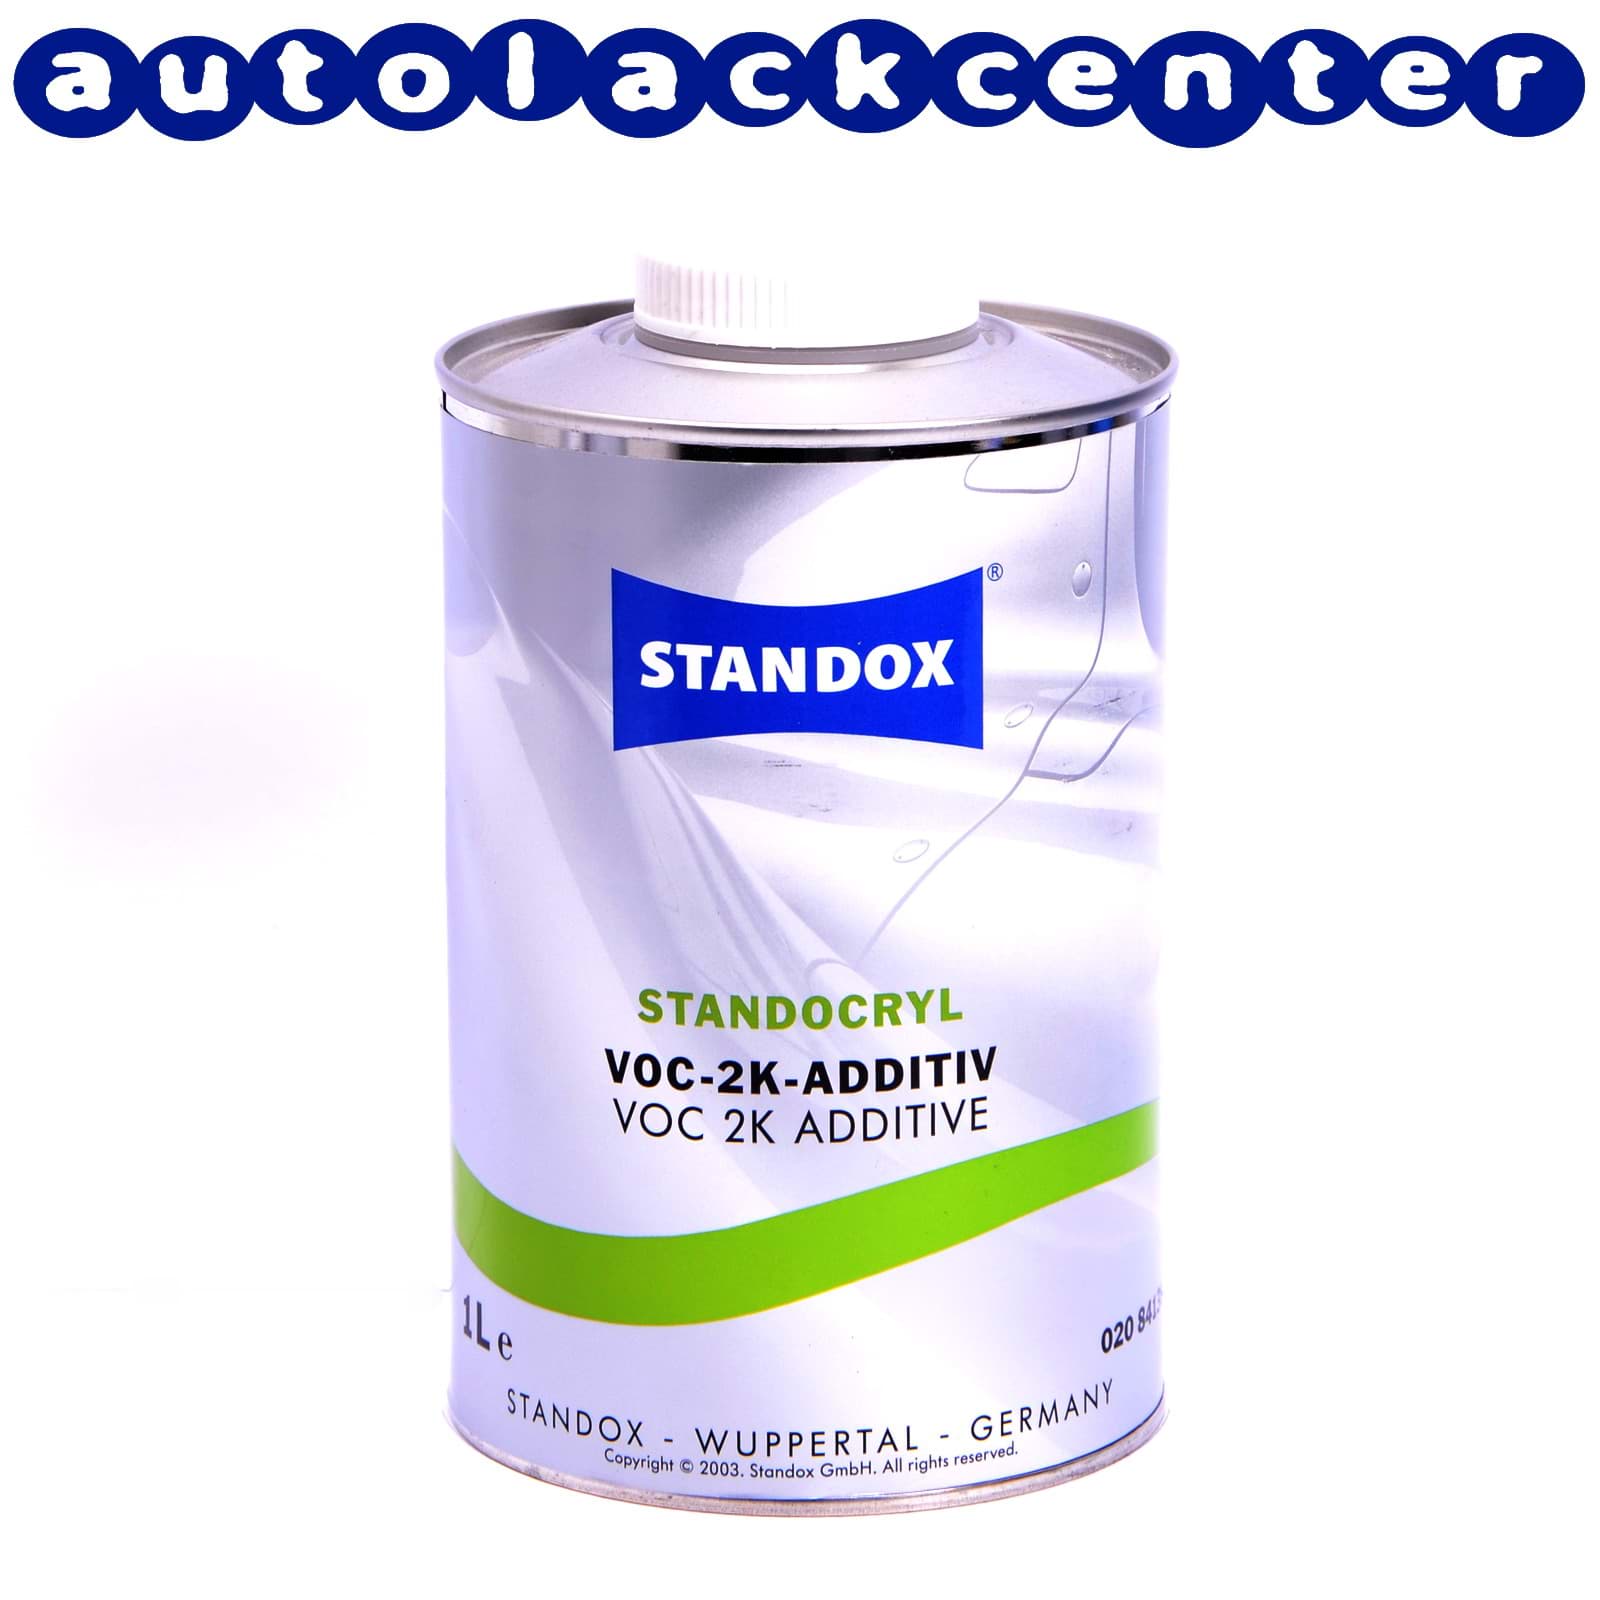 Изображение Standox Standocryl VOC-2K-Additiv 1Liter